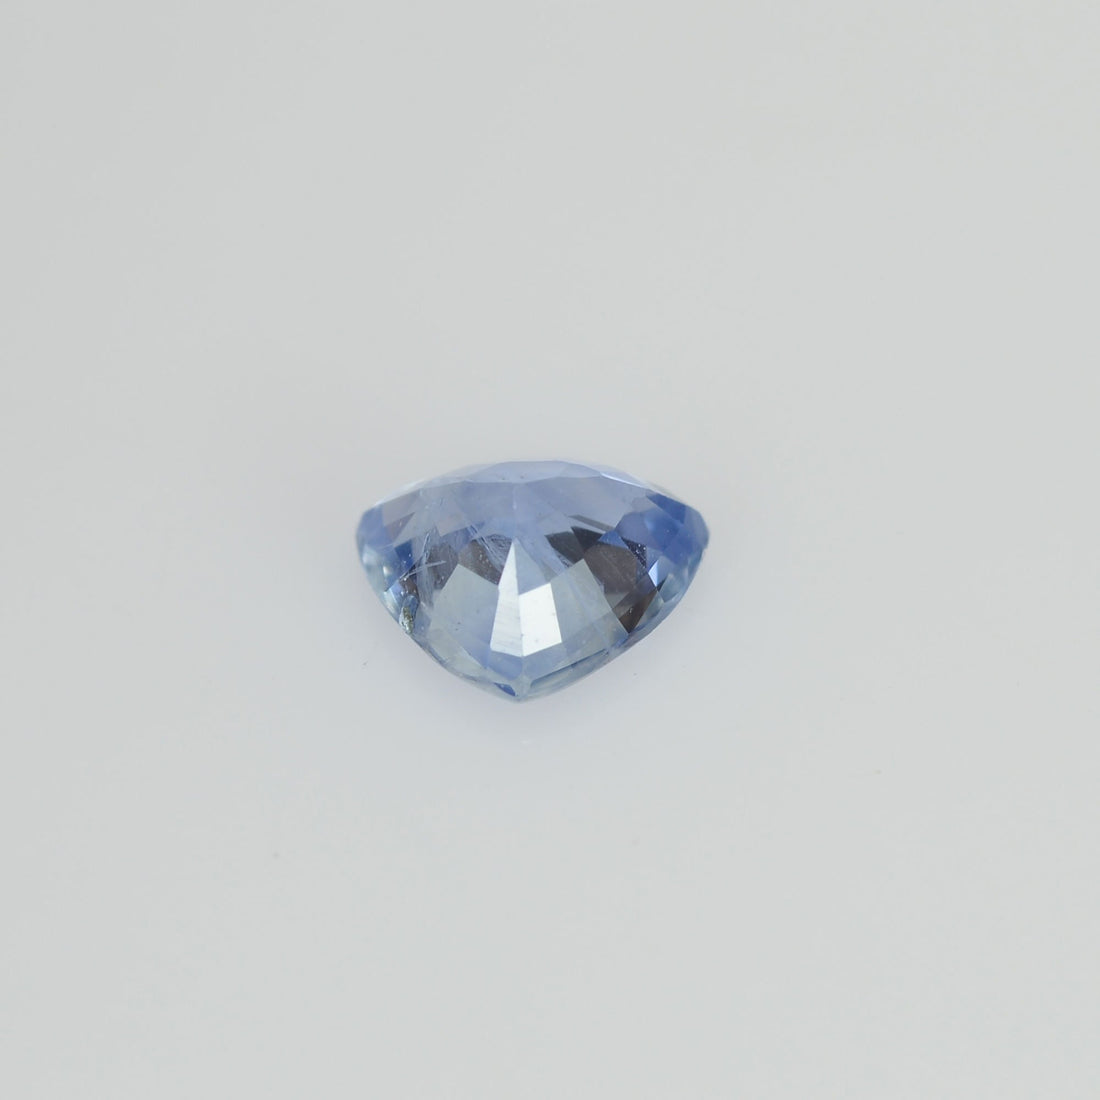 0.37 Cts Natural Blue Sapphire Loose Gemstone Trillion Cut